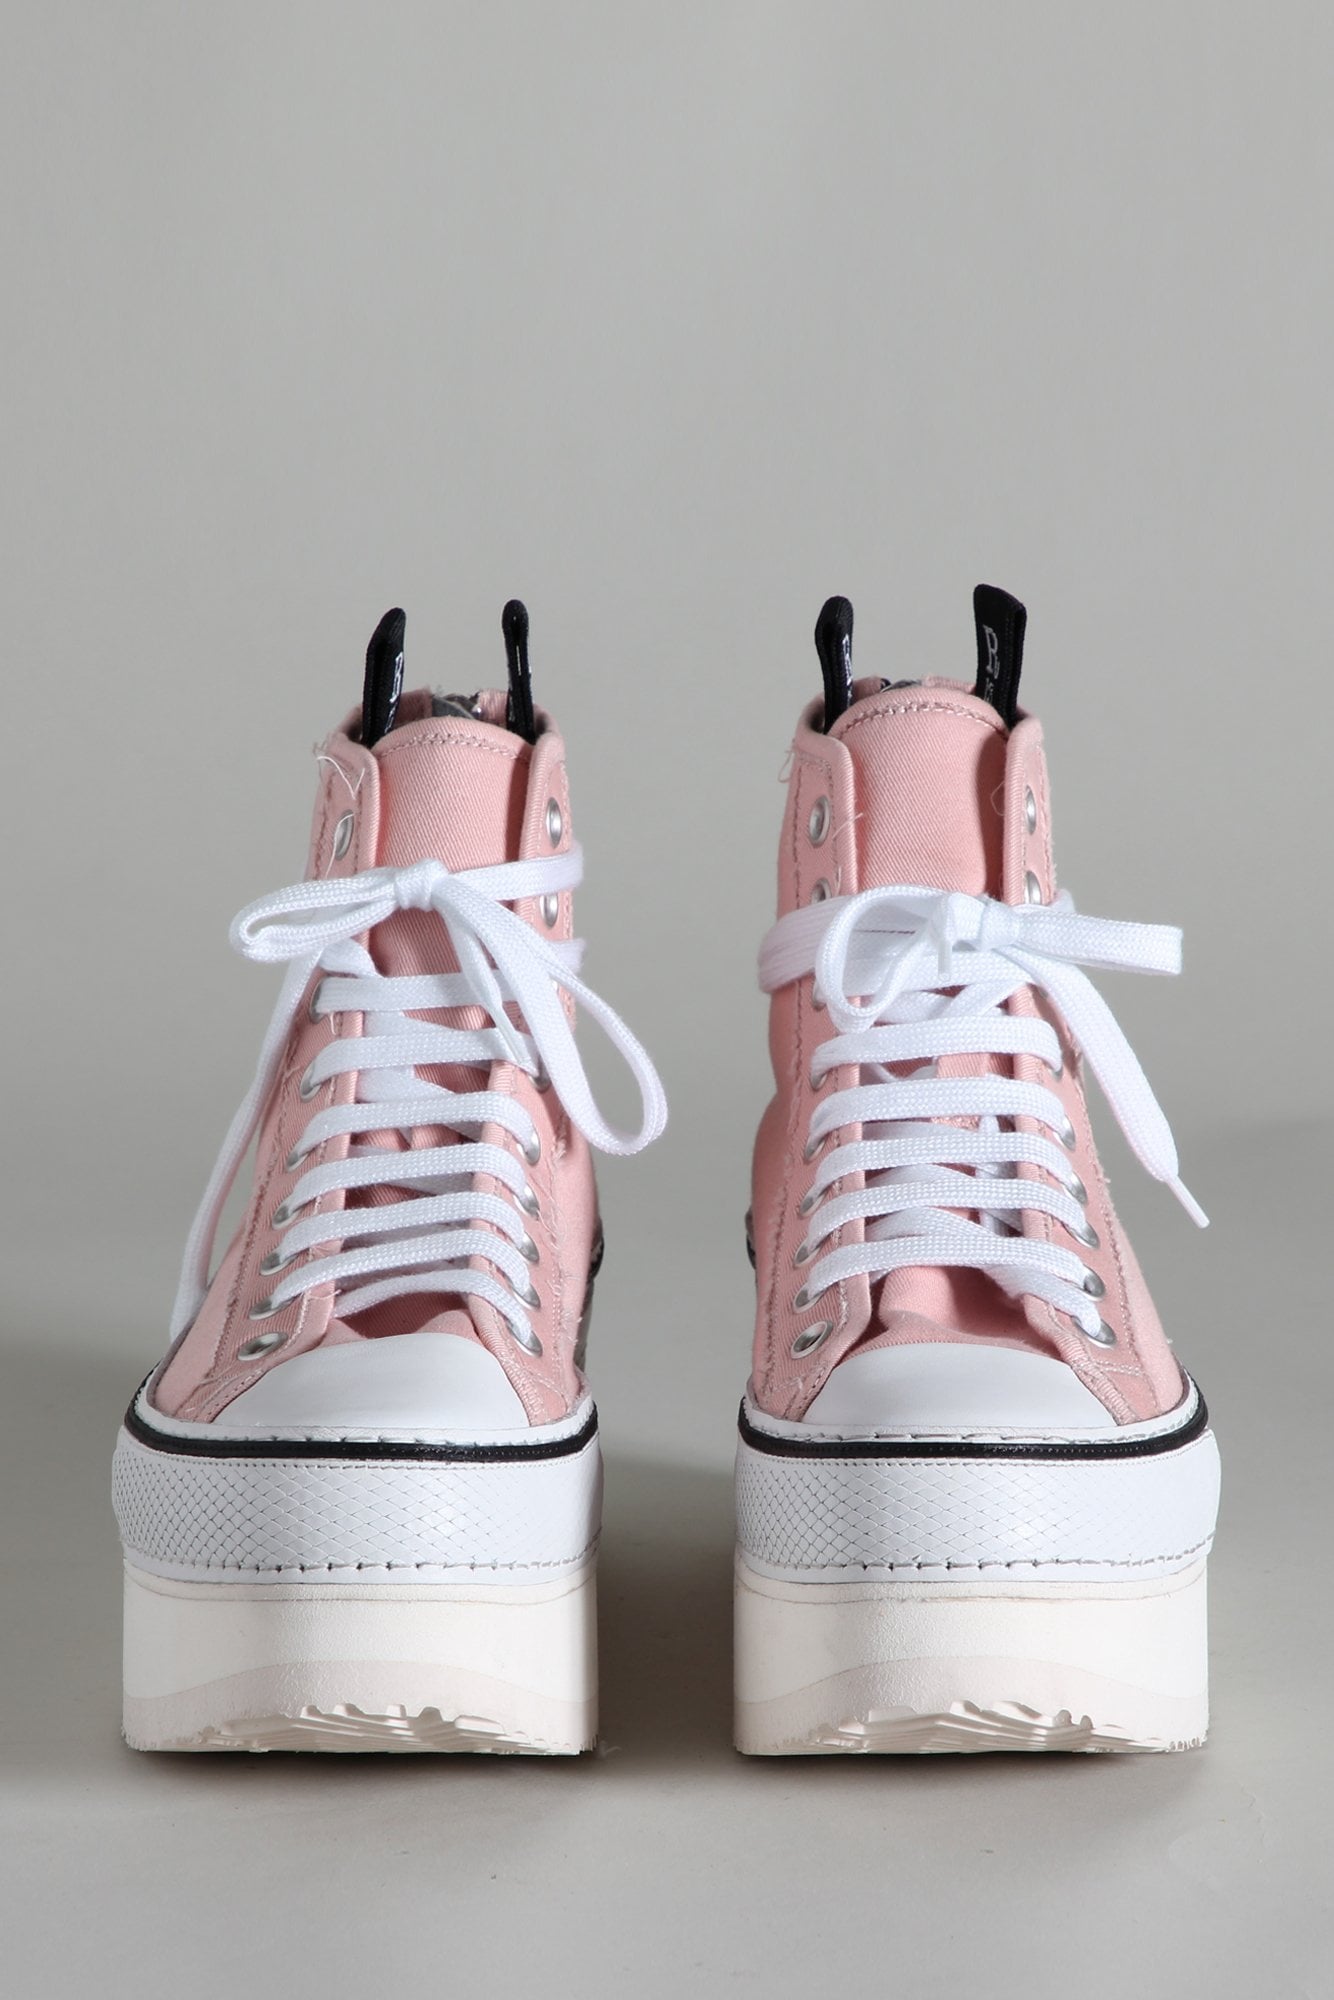 Platform High Top Sneakers - Pink